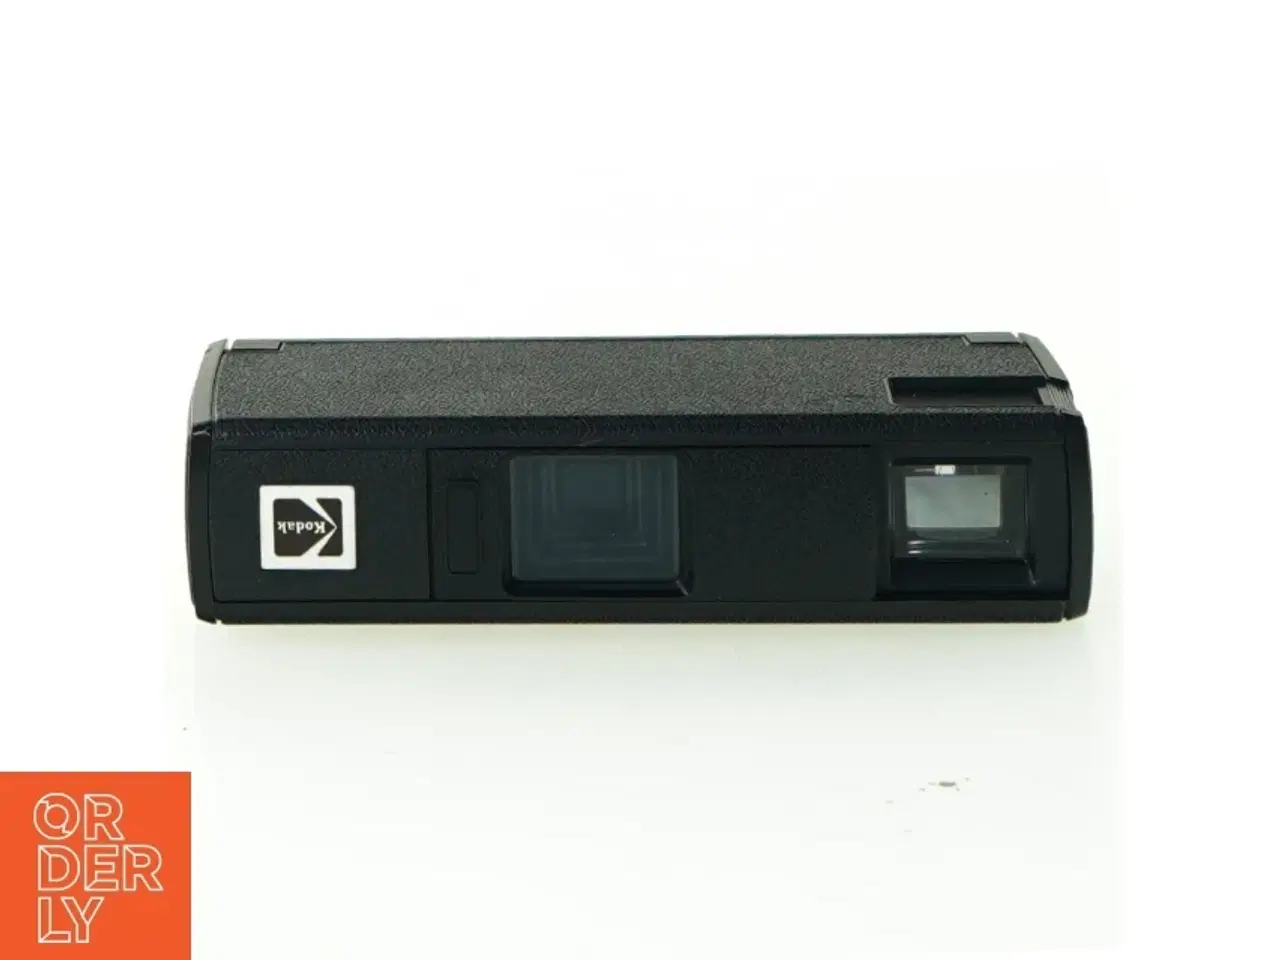 Billede 1 - Kamera fra Kodak (str. 12 x 6 x 3 cm)